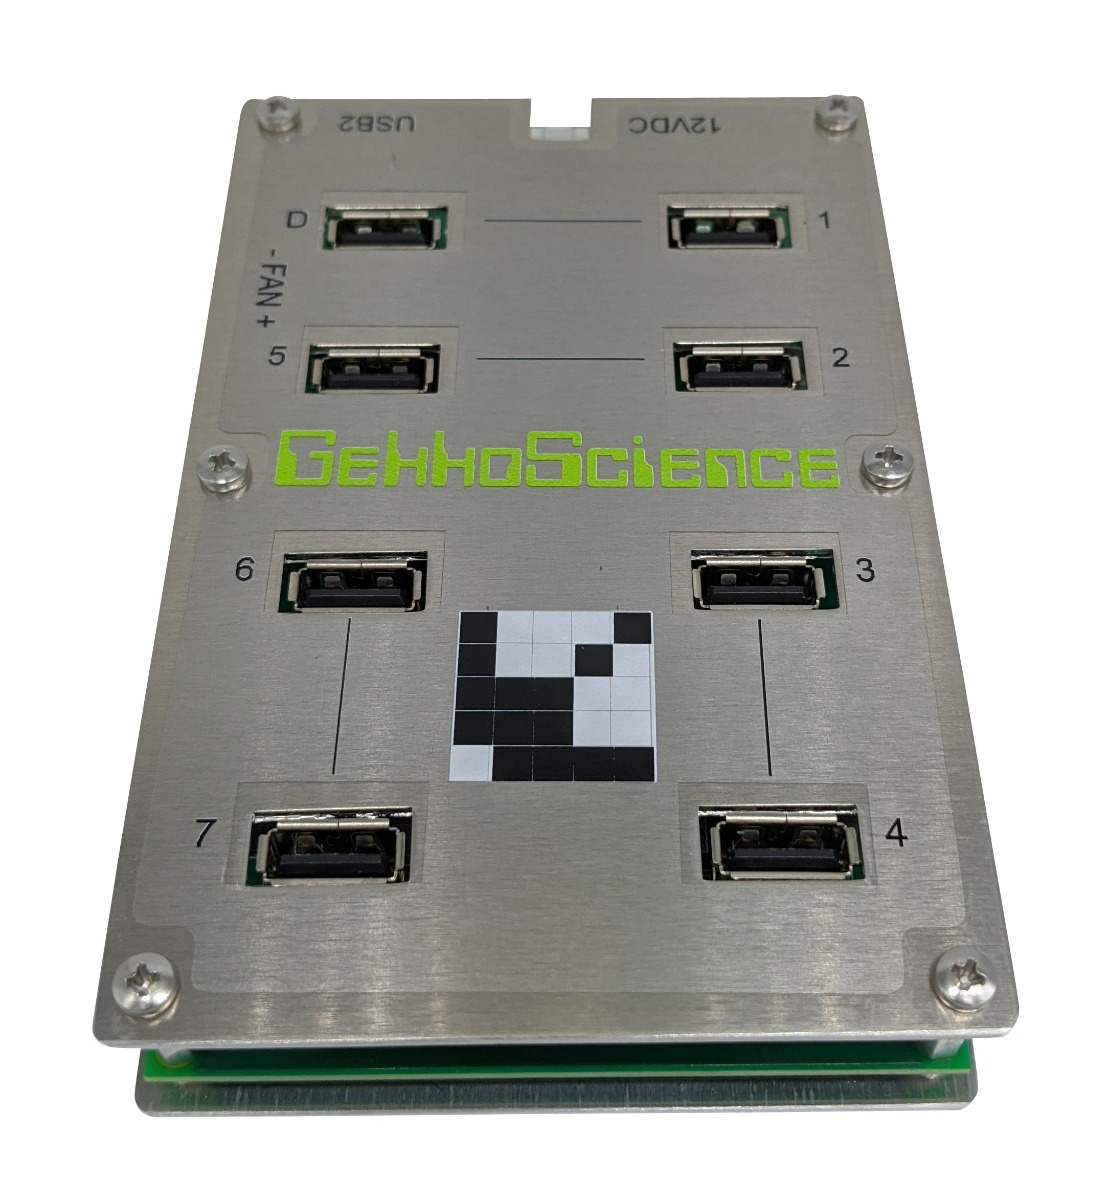 Gekkoscience 8 Port USB Hub 2.0